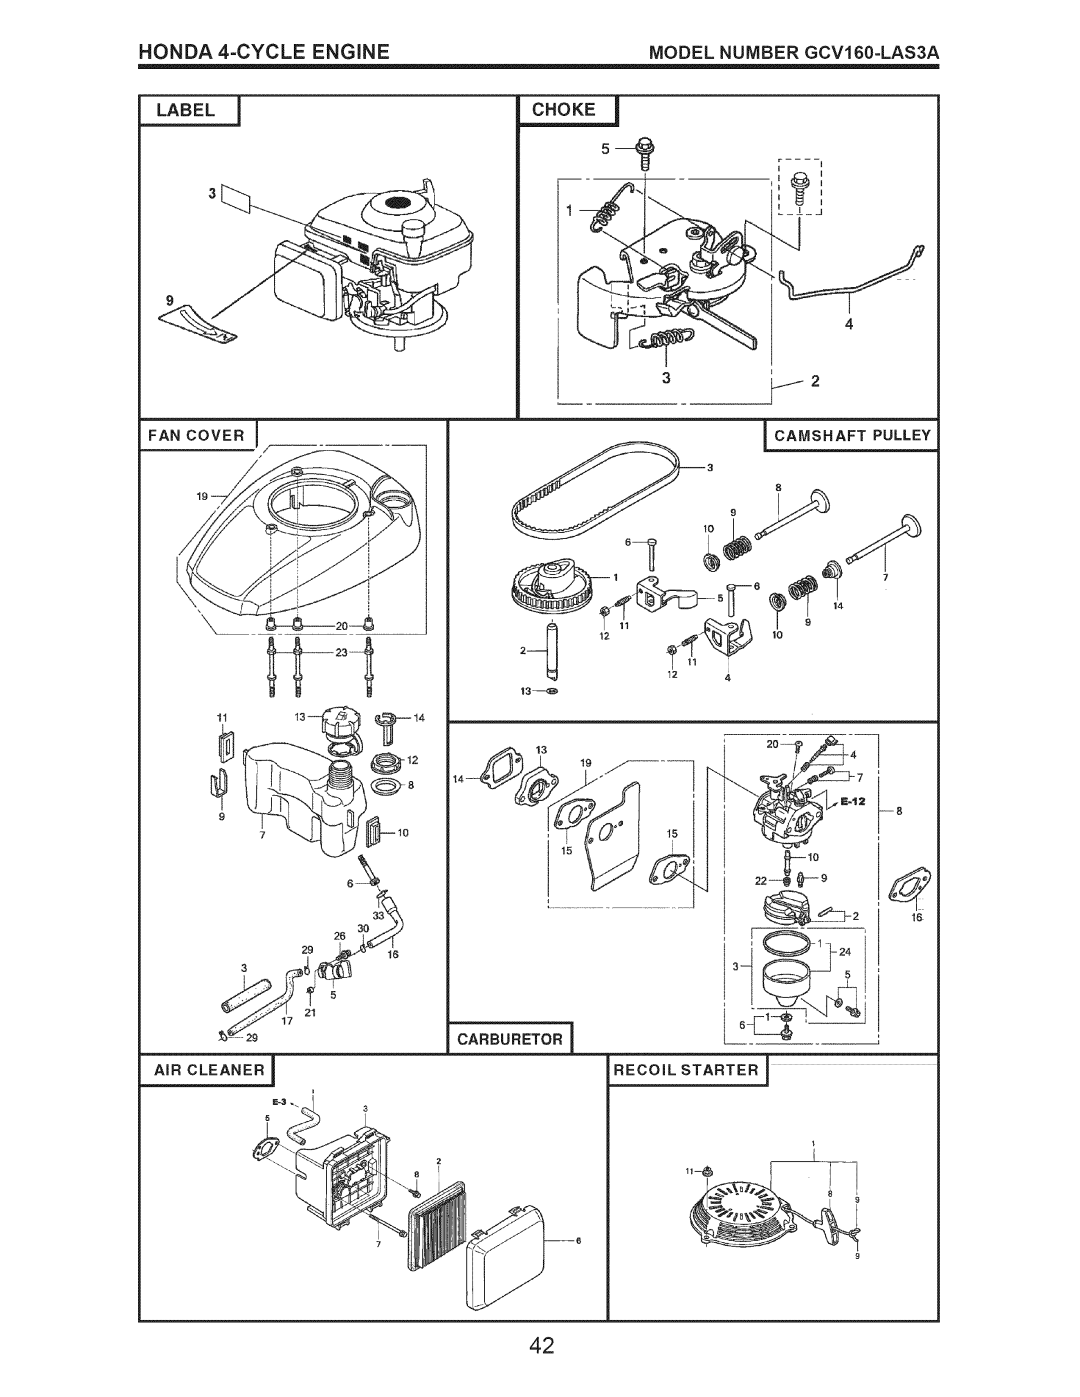 Craftsman 917.376540 manual HONDA 4-CYCLEENGINE, Label 